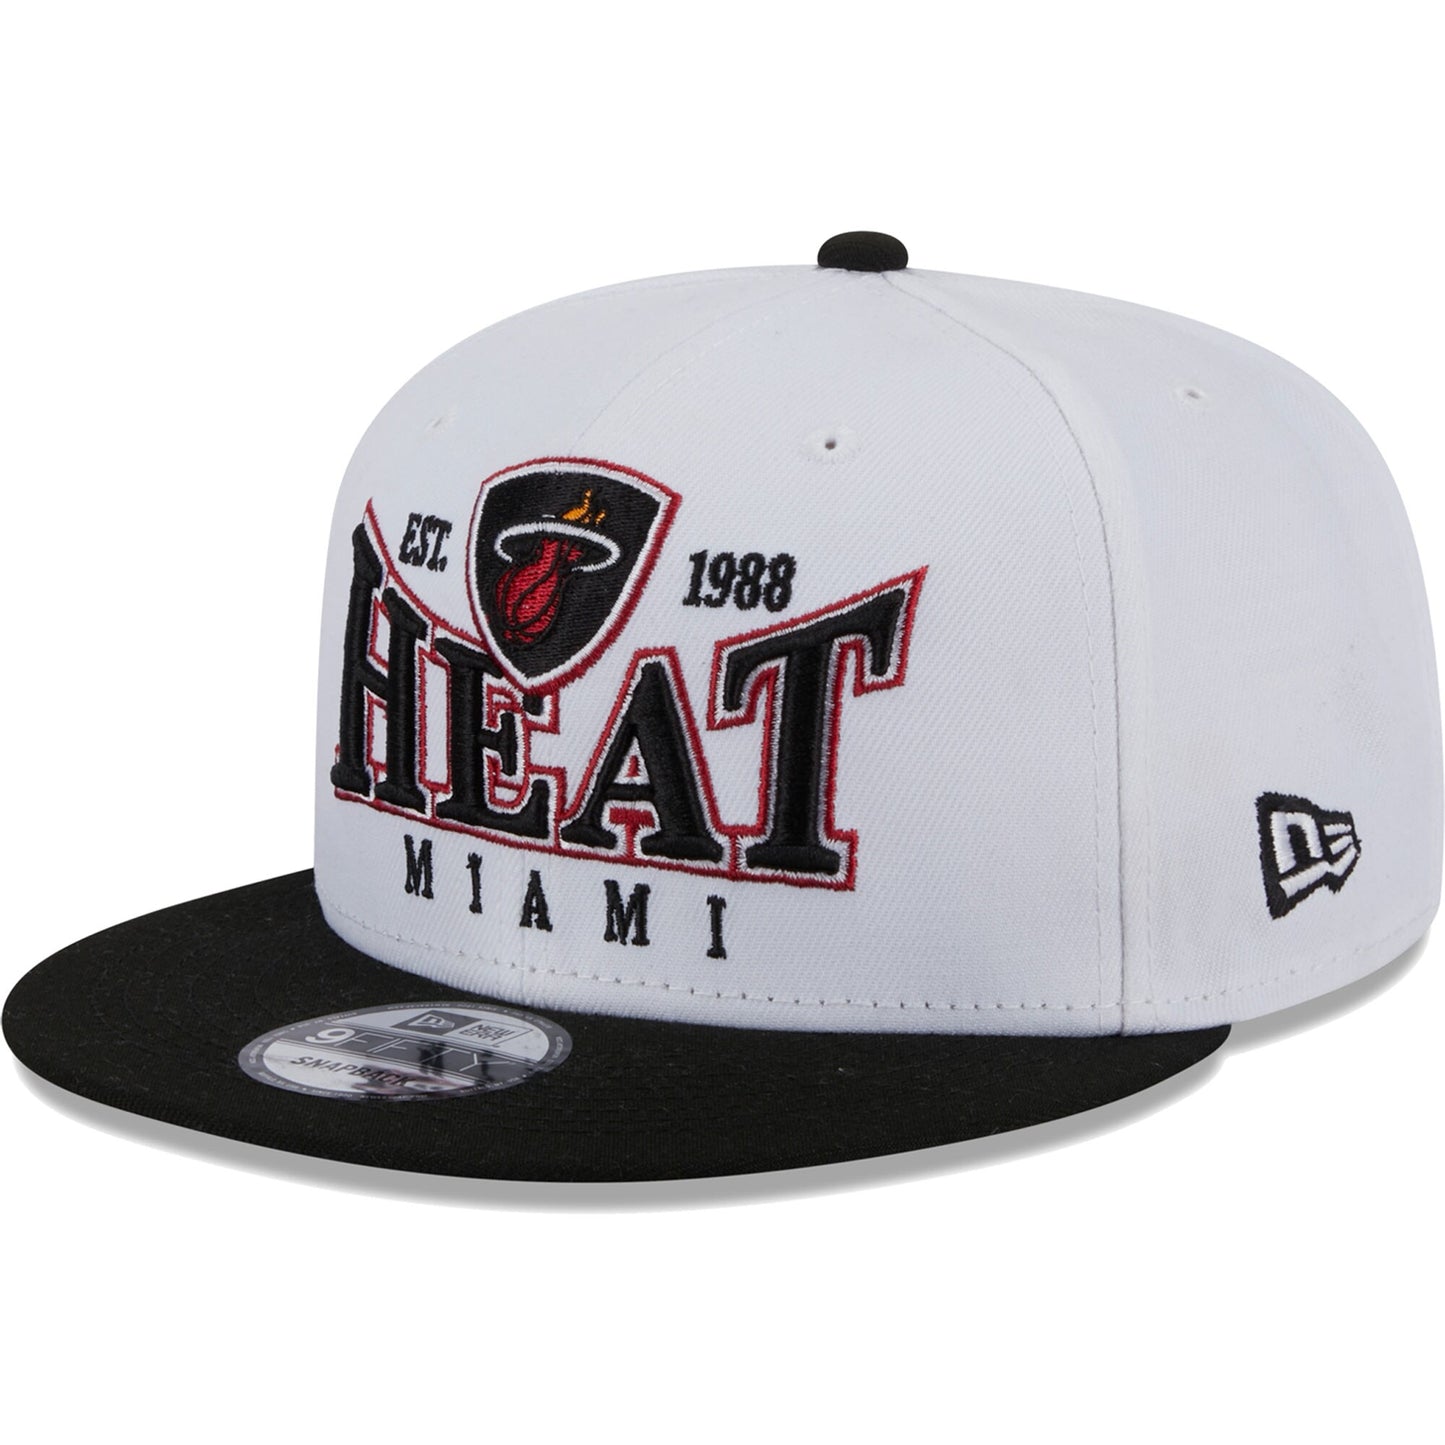 Miami Heat New Era Crest Stack 9FIFTY Snapback Hat - White/Black